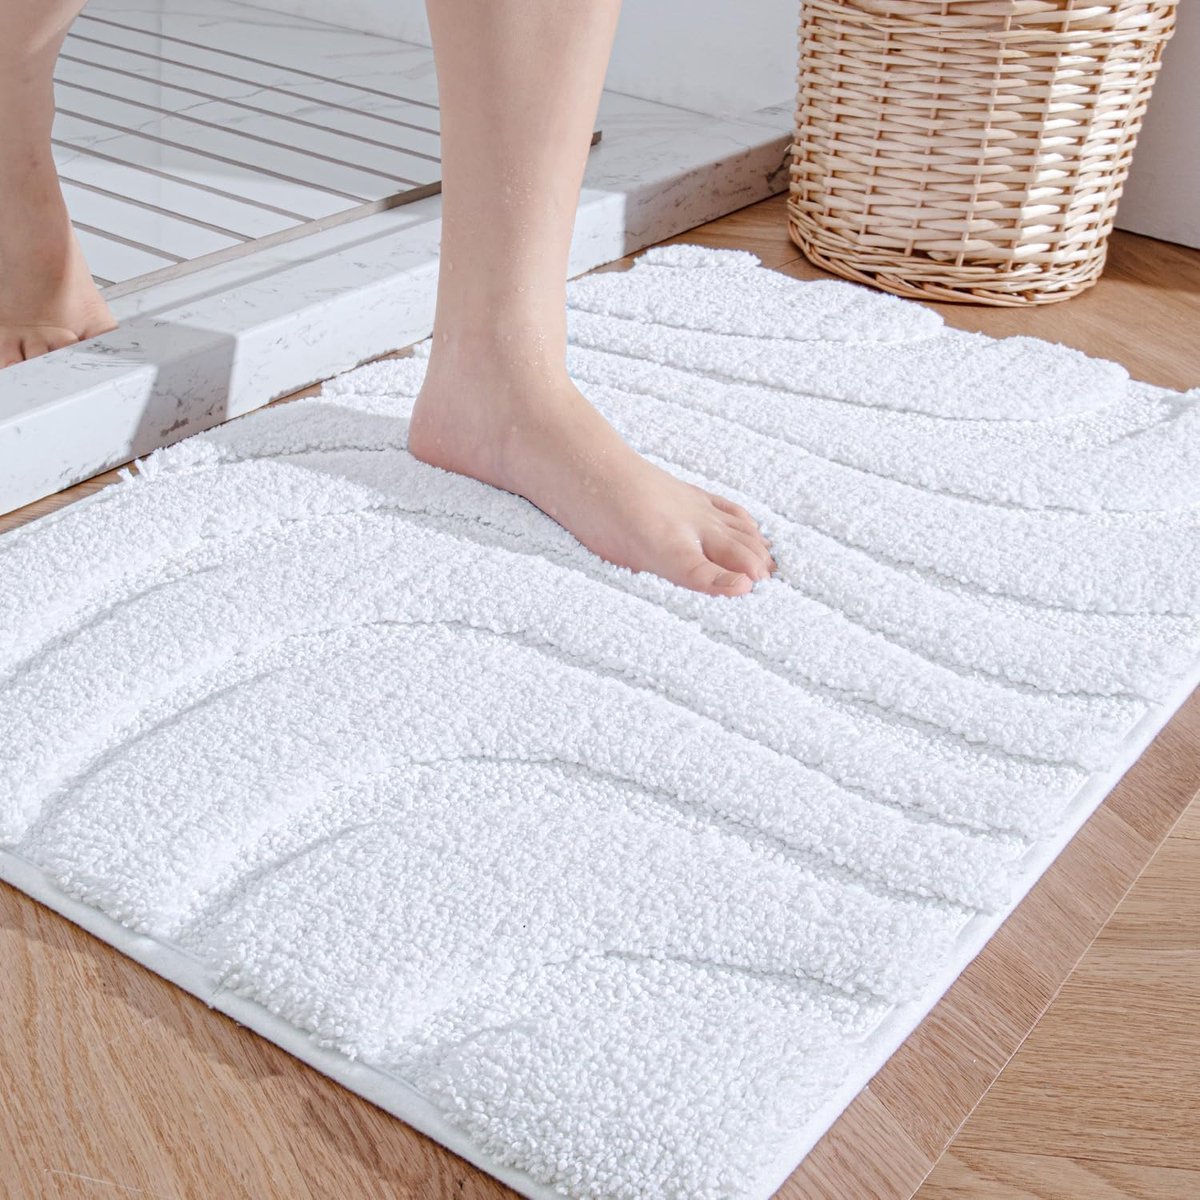 Badkamermat 40x60cm, antislip badmat, absorberend wasbaar badkamertapijt